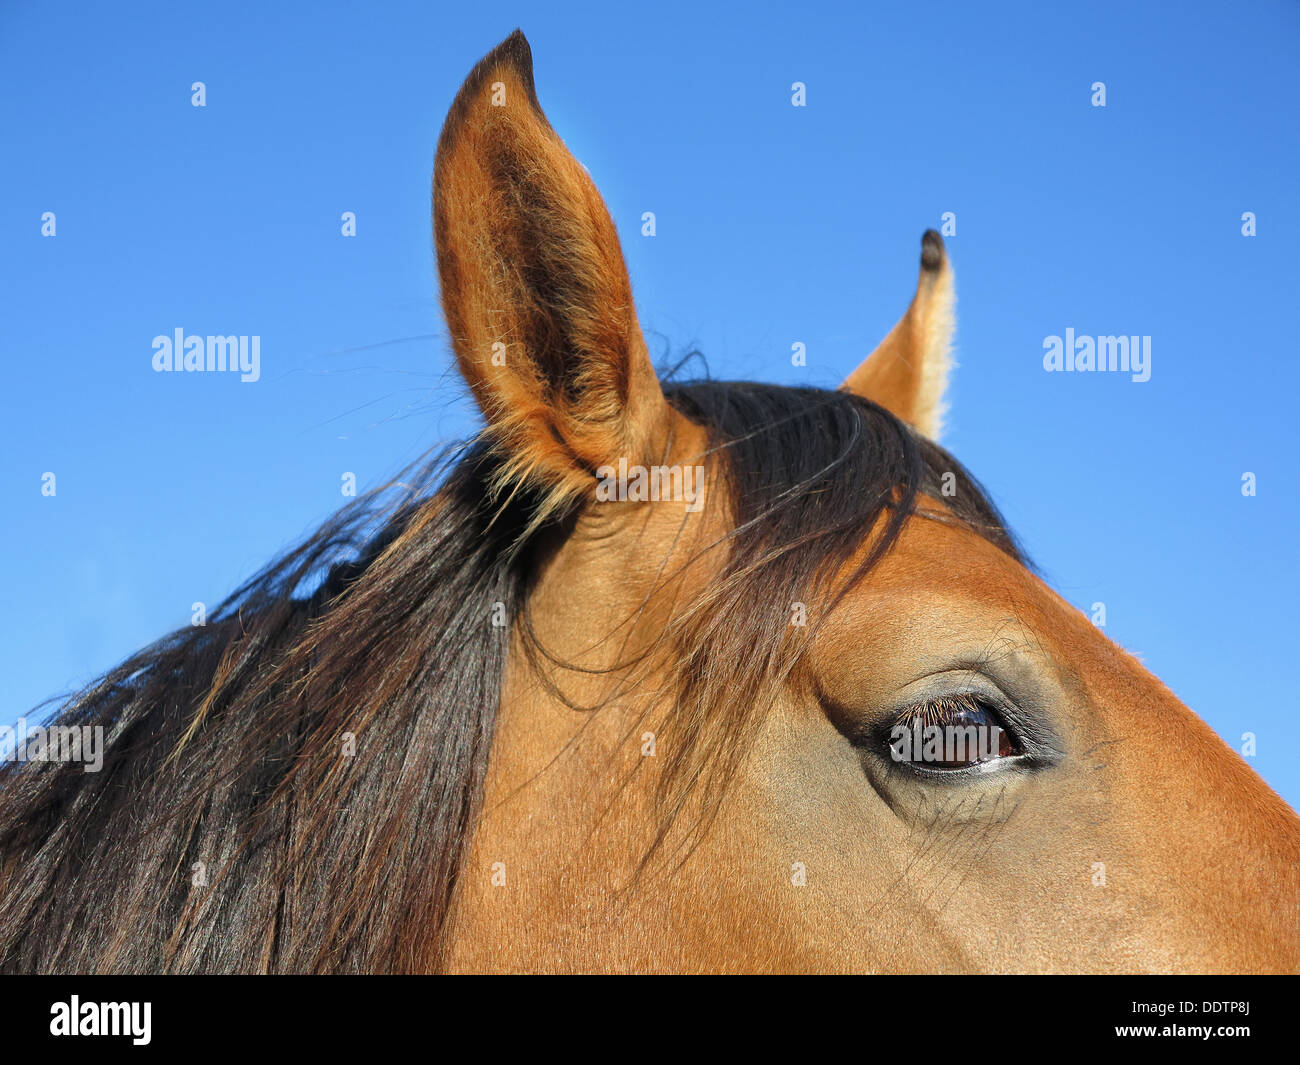 Cabeza de caballo marrón estrechamente en la pradera. Foto de stock